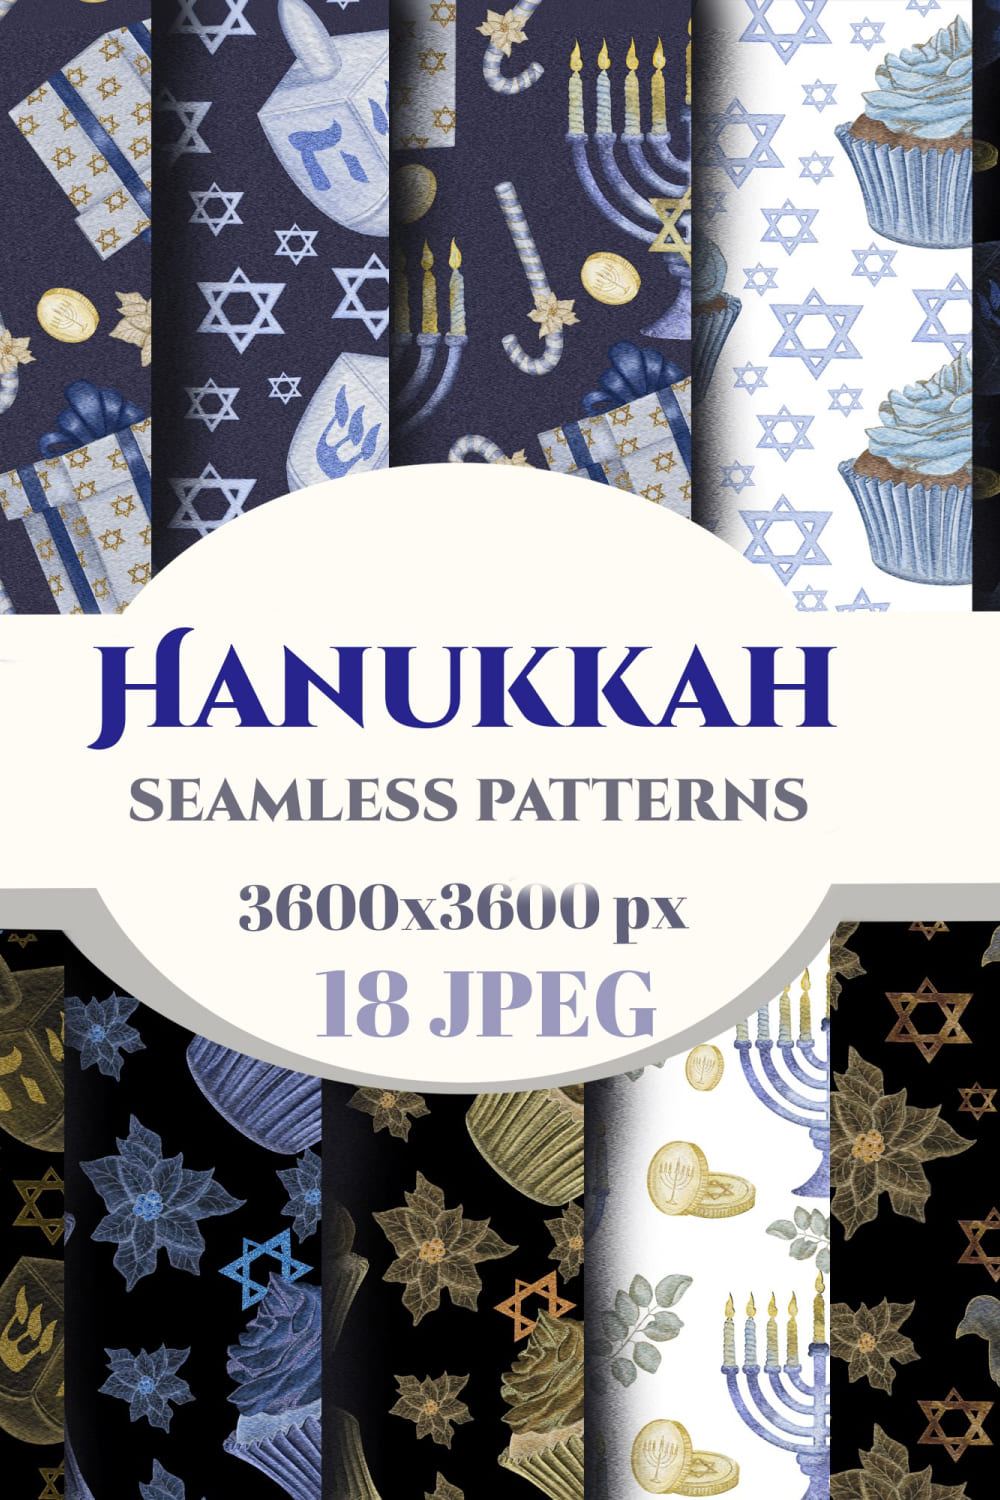 Hanukkah trendy seamless pattern of pinterest.